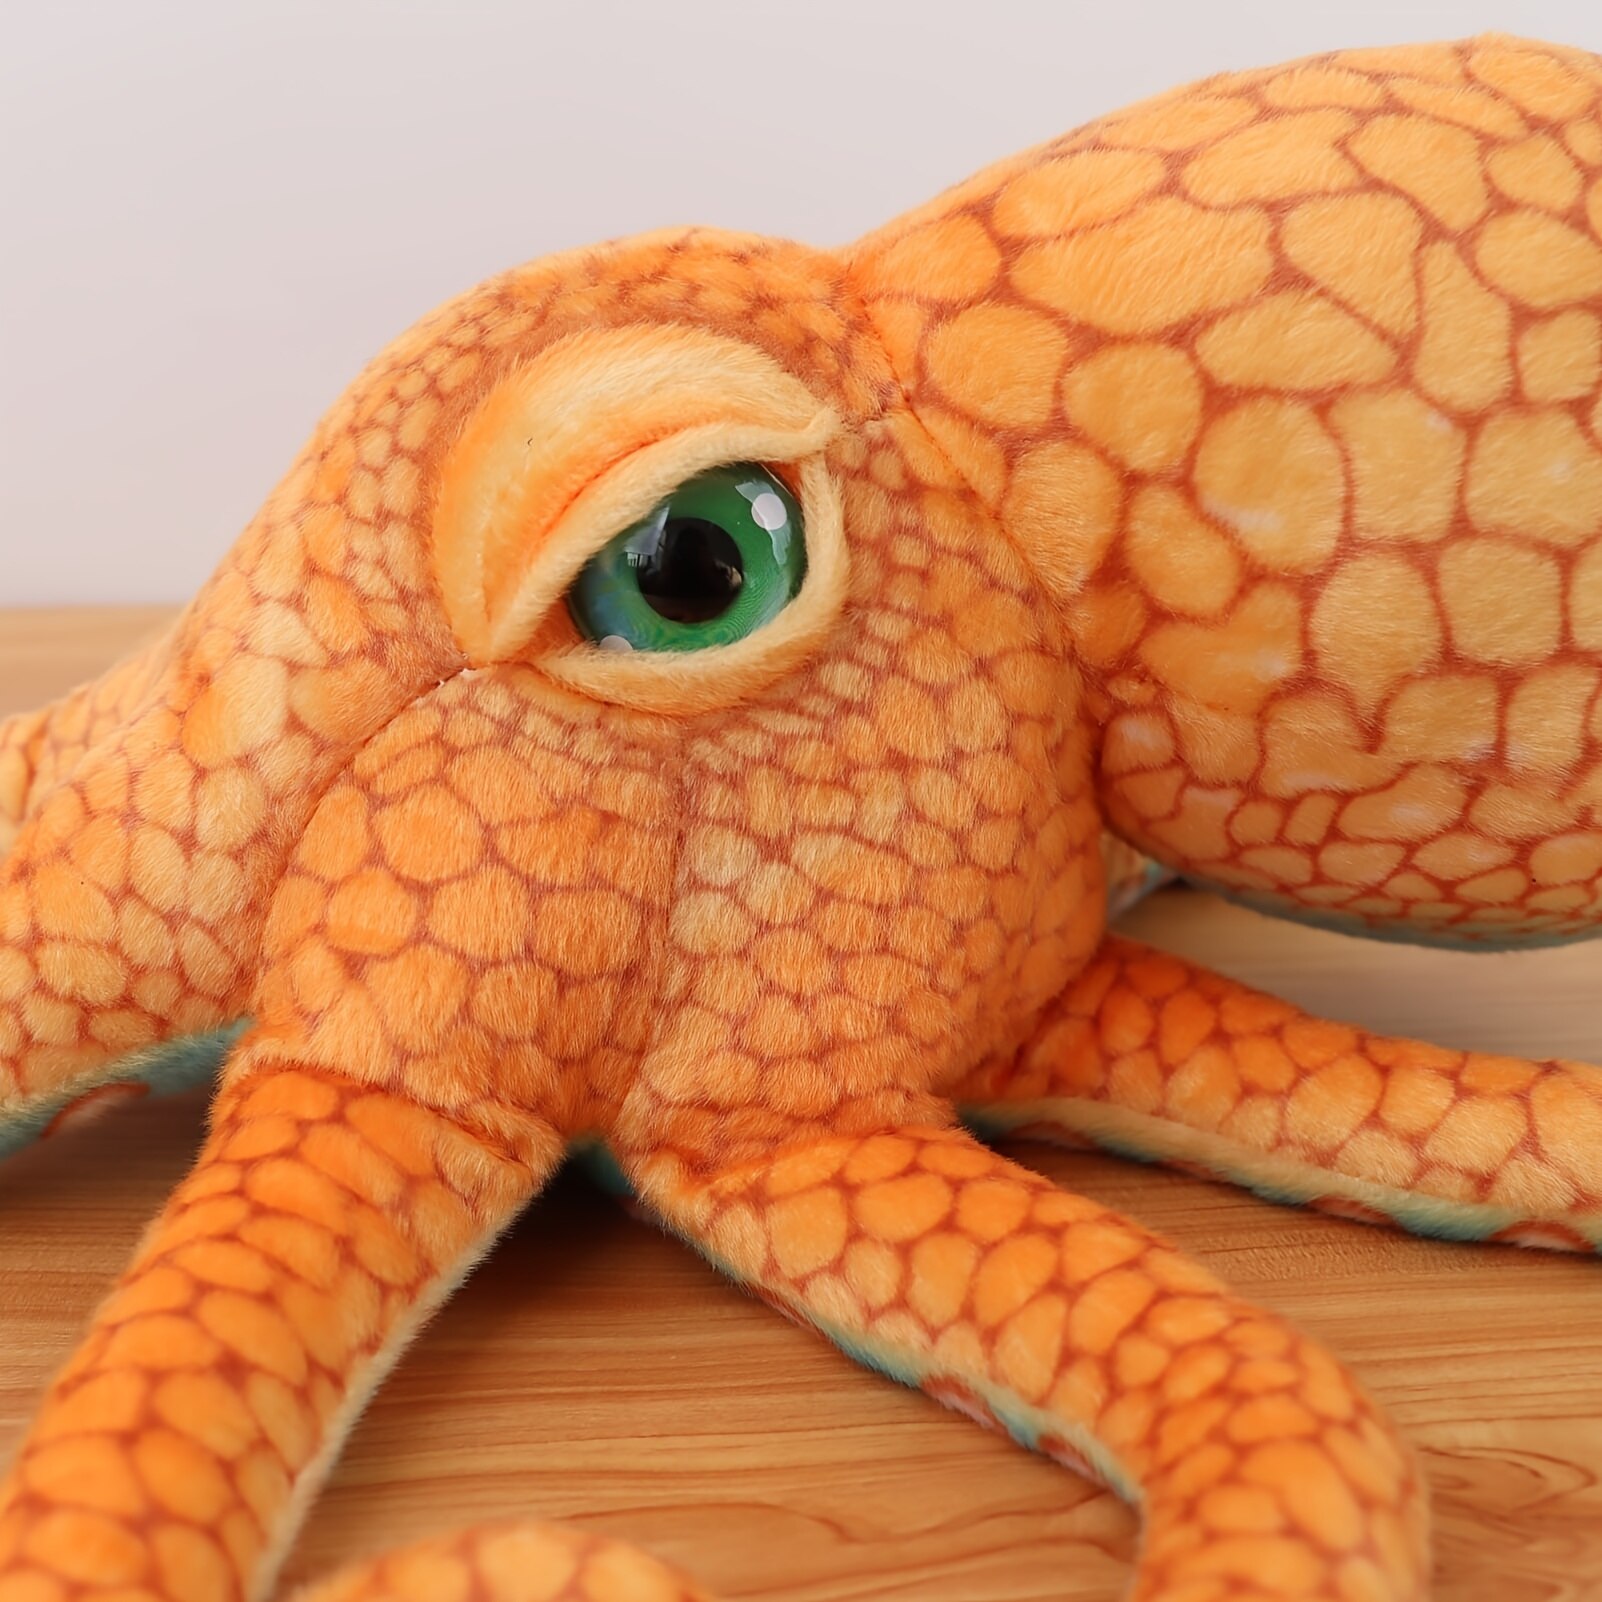 55 80cm Giant Simulated octopus Stuffed Toy High Quality lifelike Stuffed Sea Animal Doll Plush toys 4